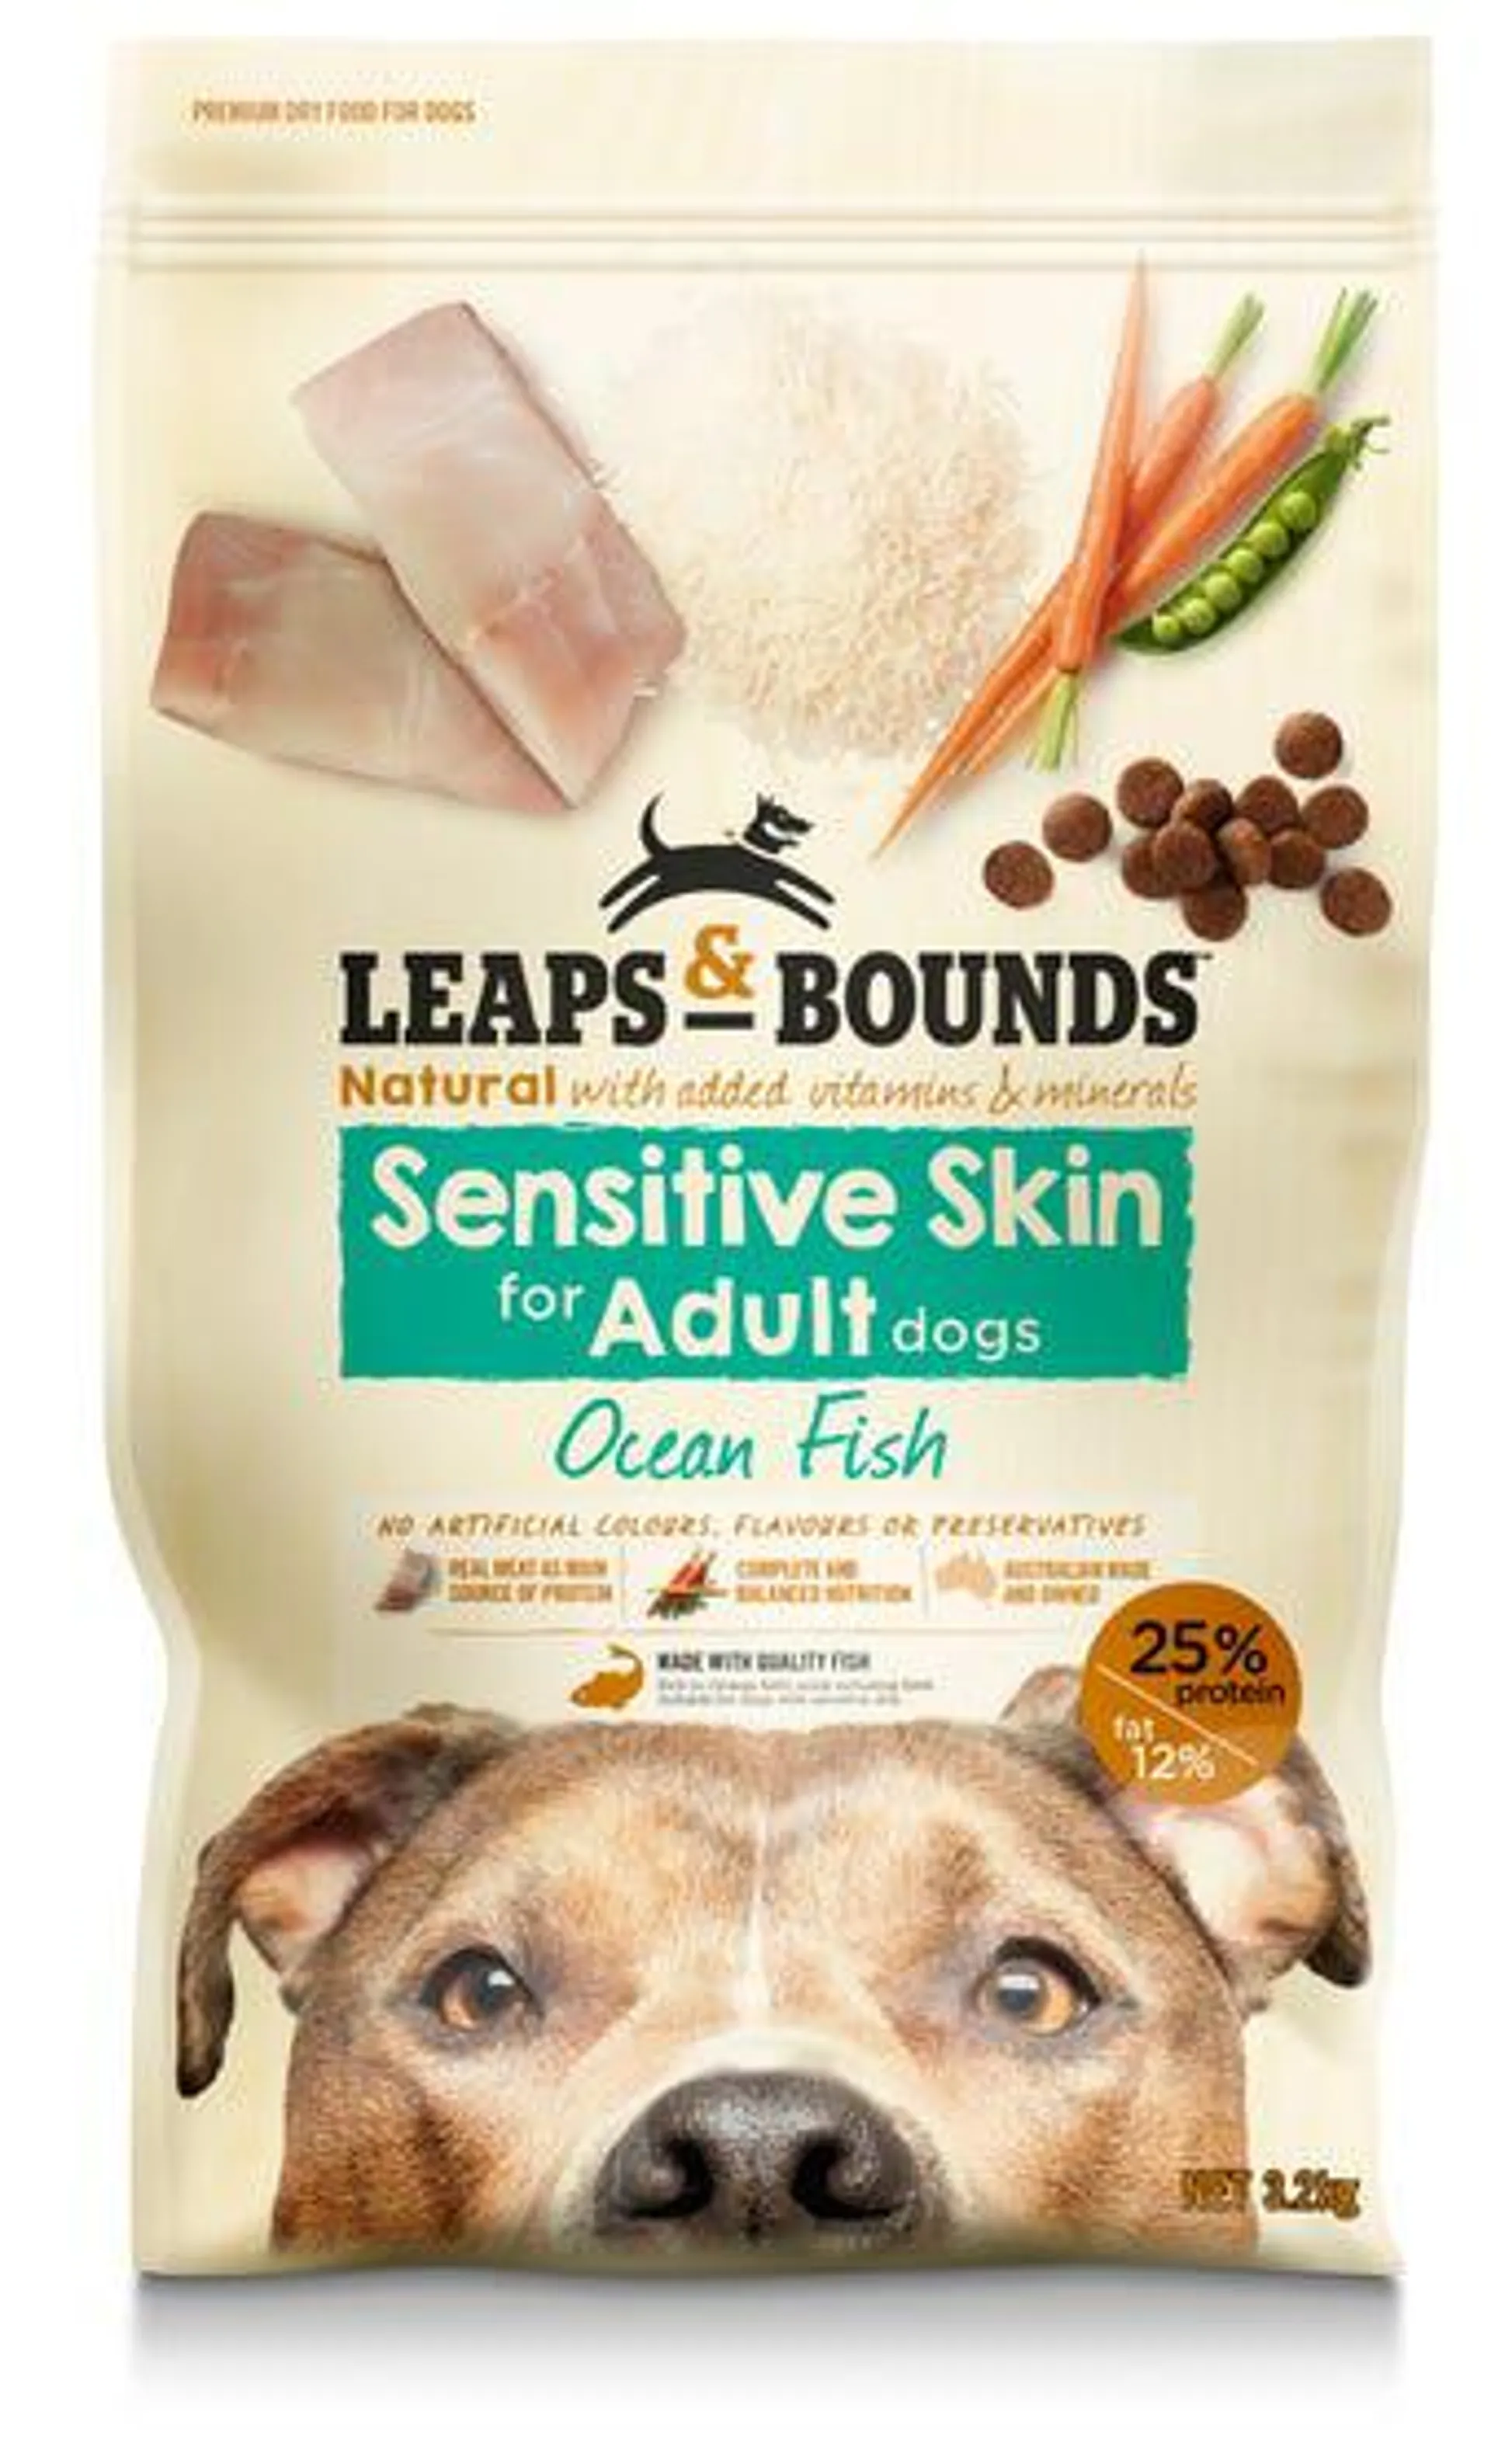 Leaps & Bounds Sensitive Skin Ocean Fish Adult Dog Food 3.2kg